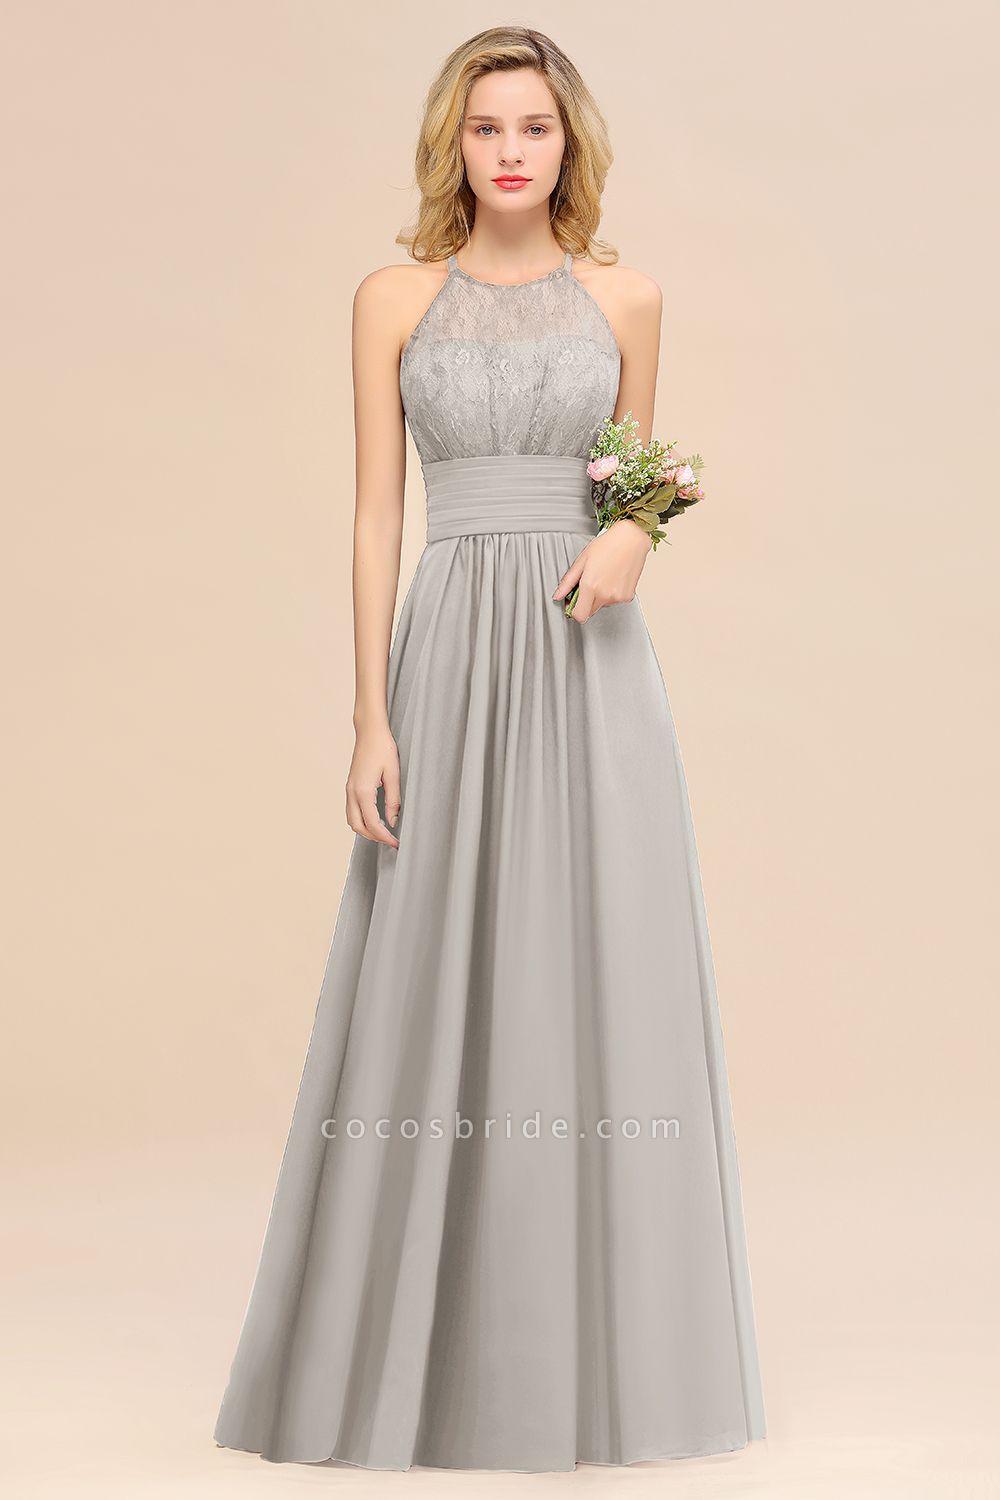 BM0766 Elegant Halter Ruffles Sleeveless Grape Lace Bridesmaid Dresses Affordable